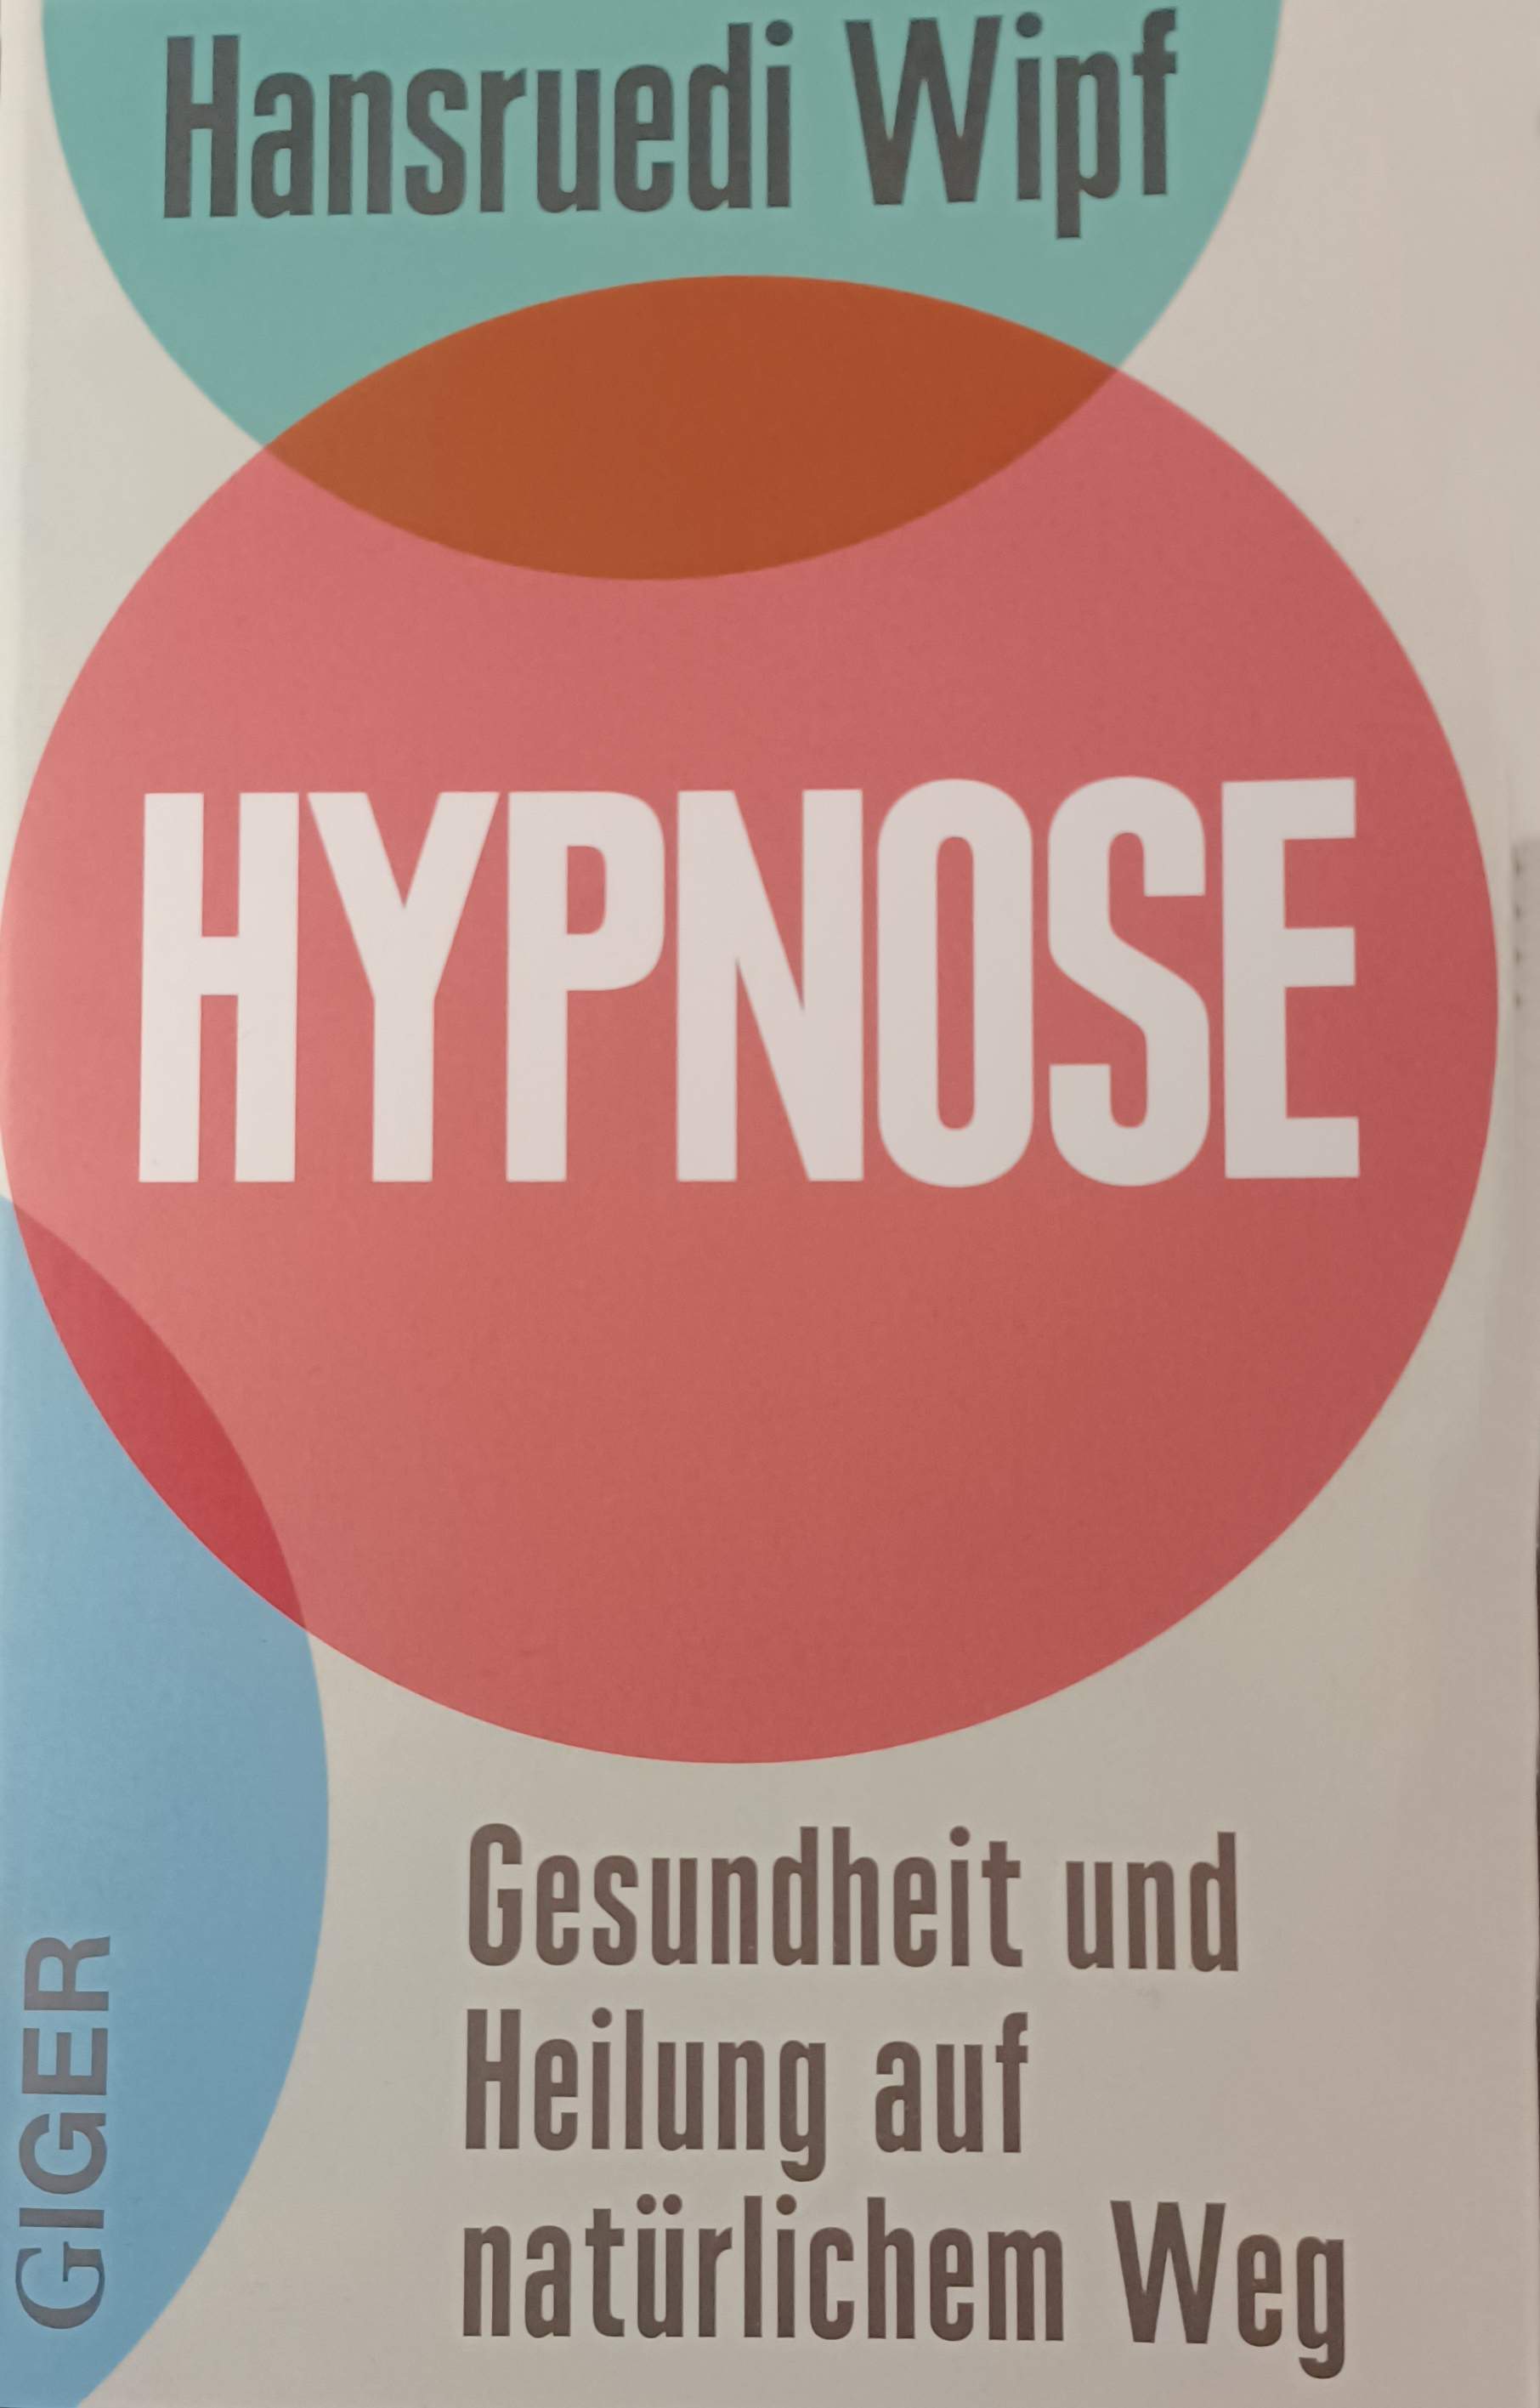 cornelia-koller@linde-hypnose.ch